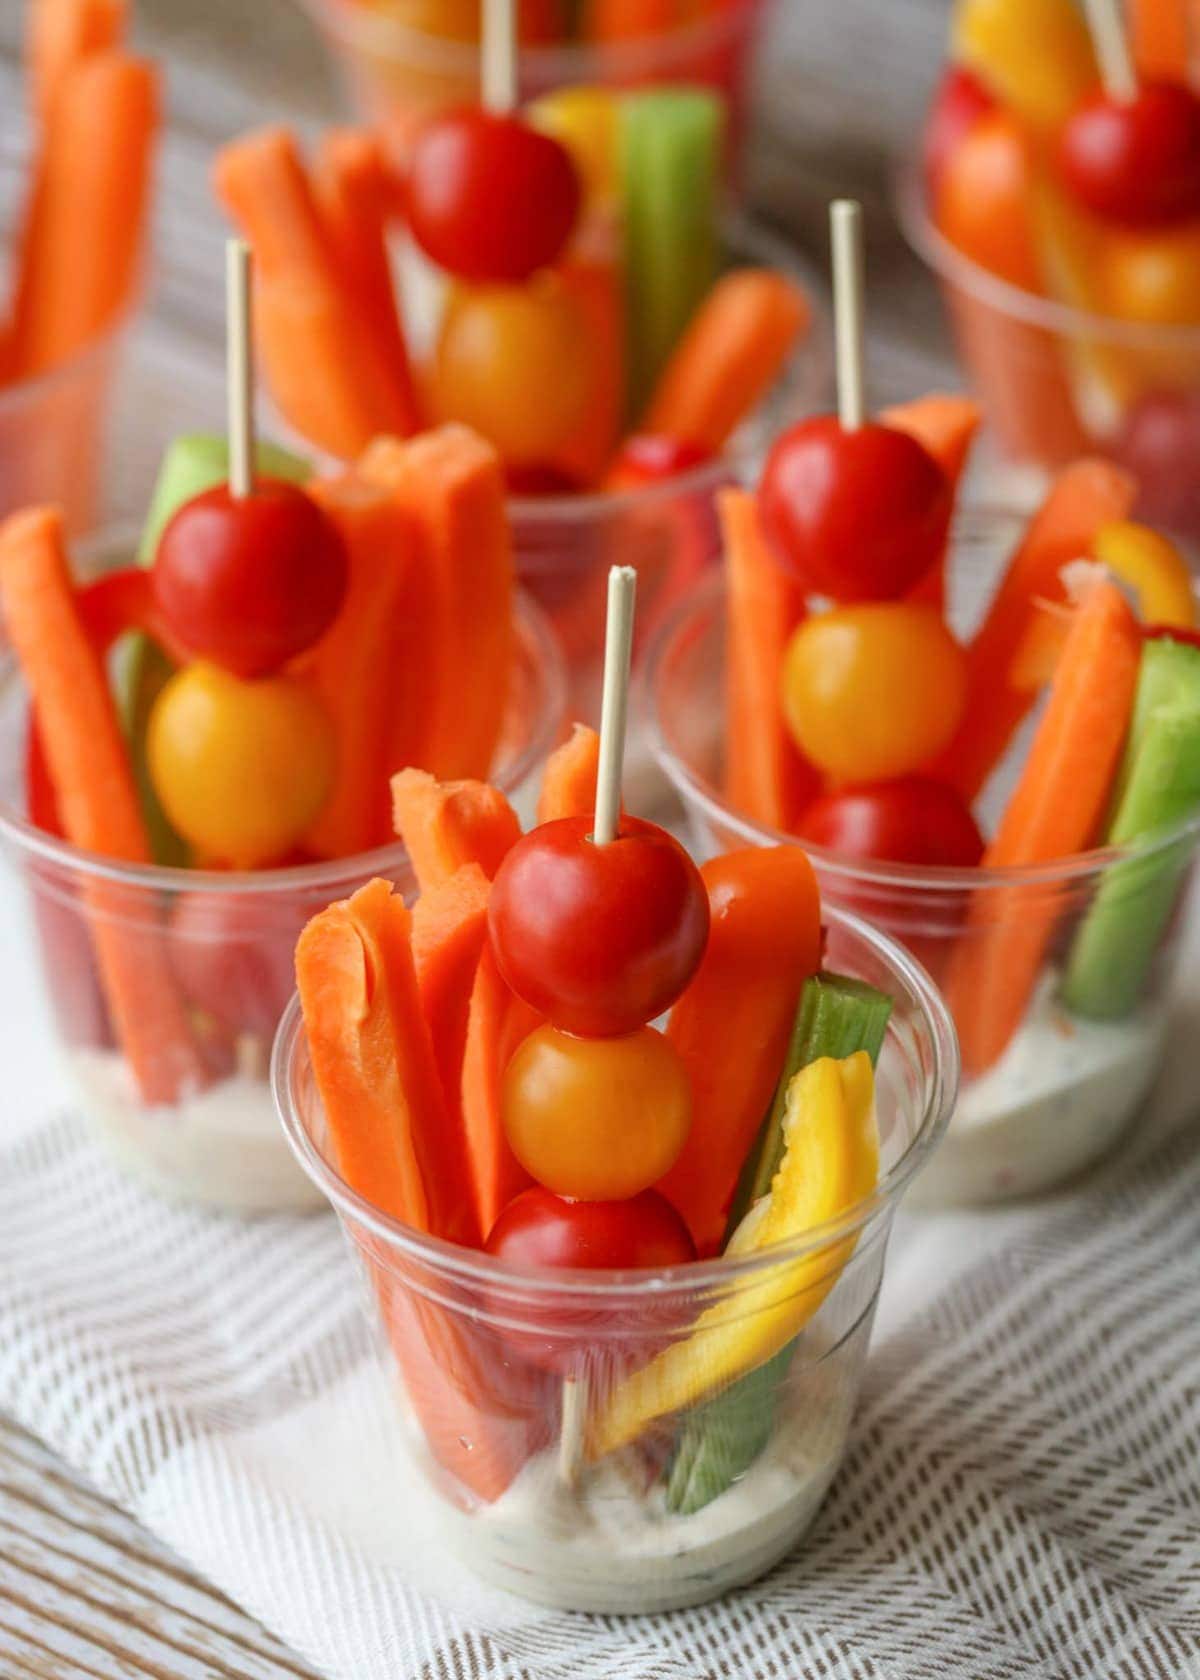 vegetable finger foods for parties